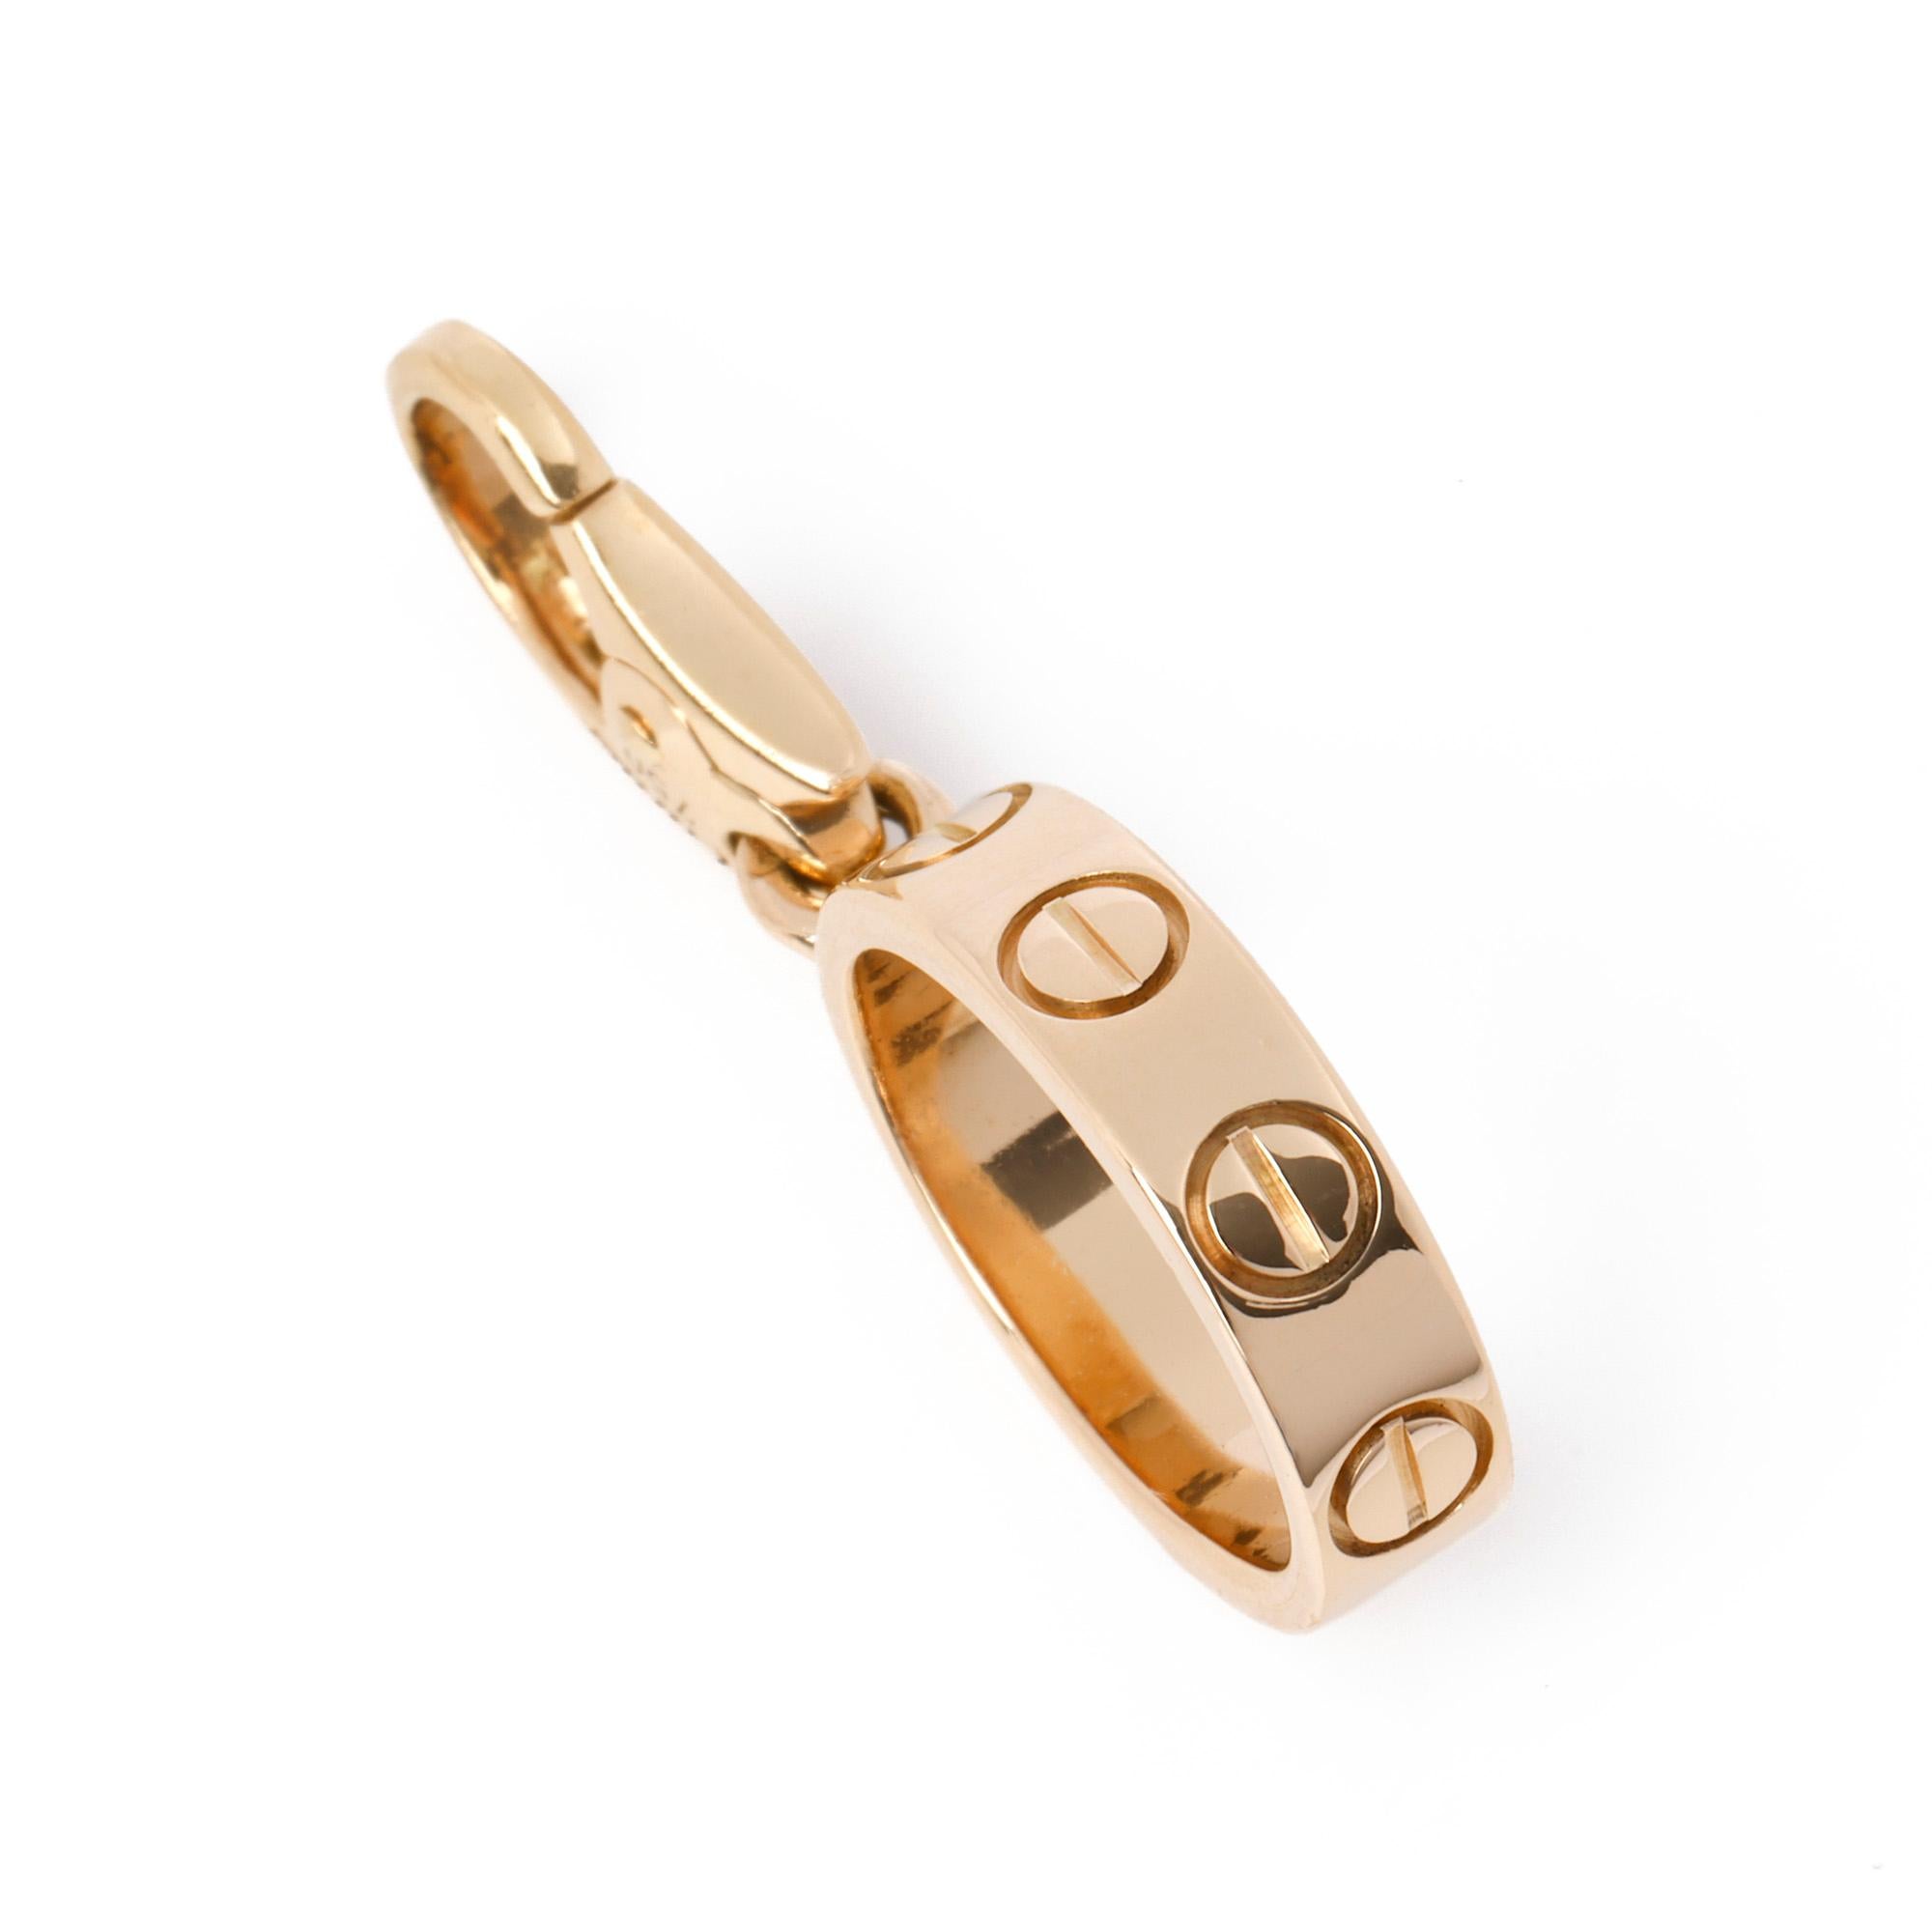 Contemporary Cartier Love 18ct Gold Charm Pendant